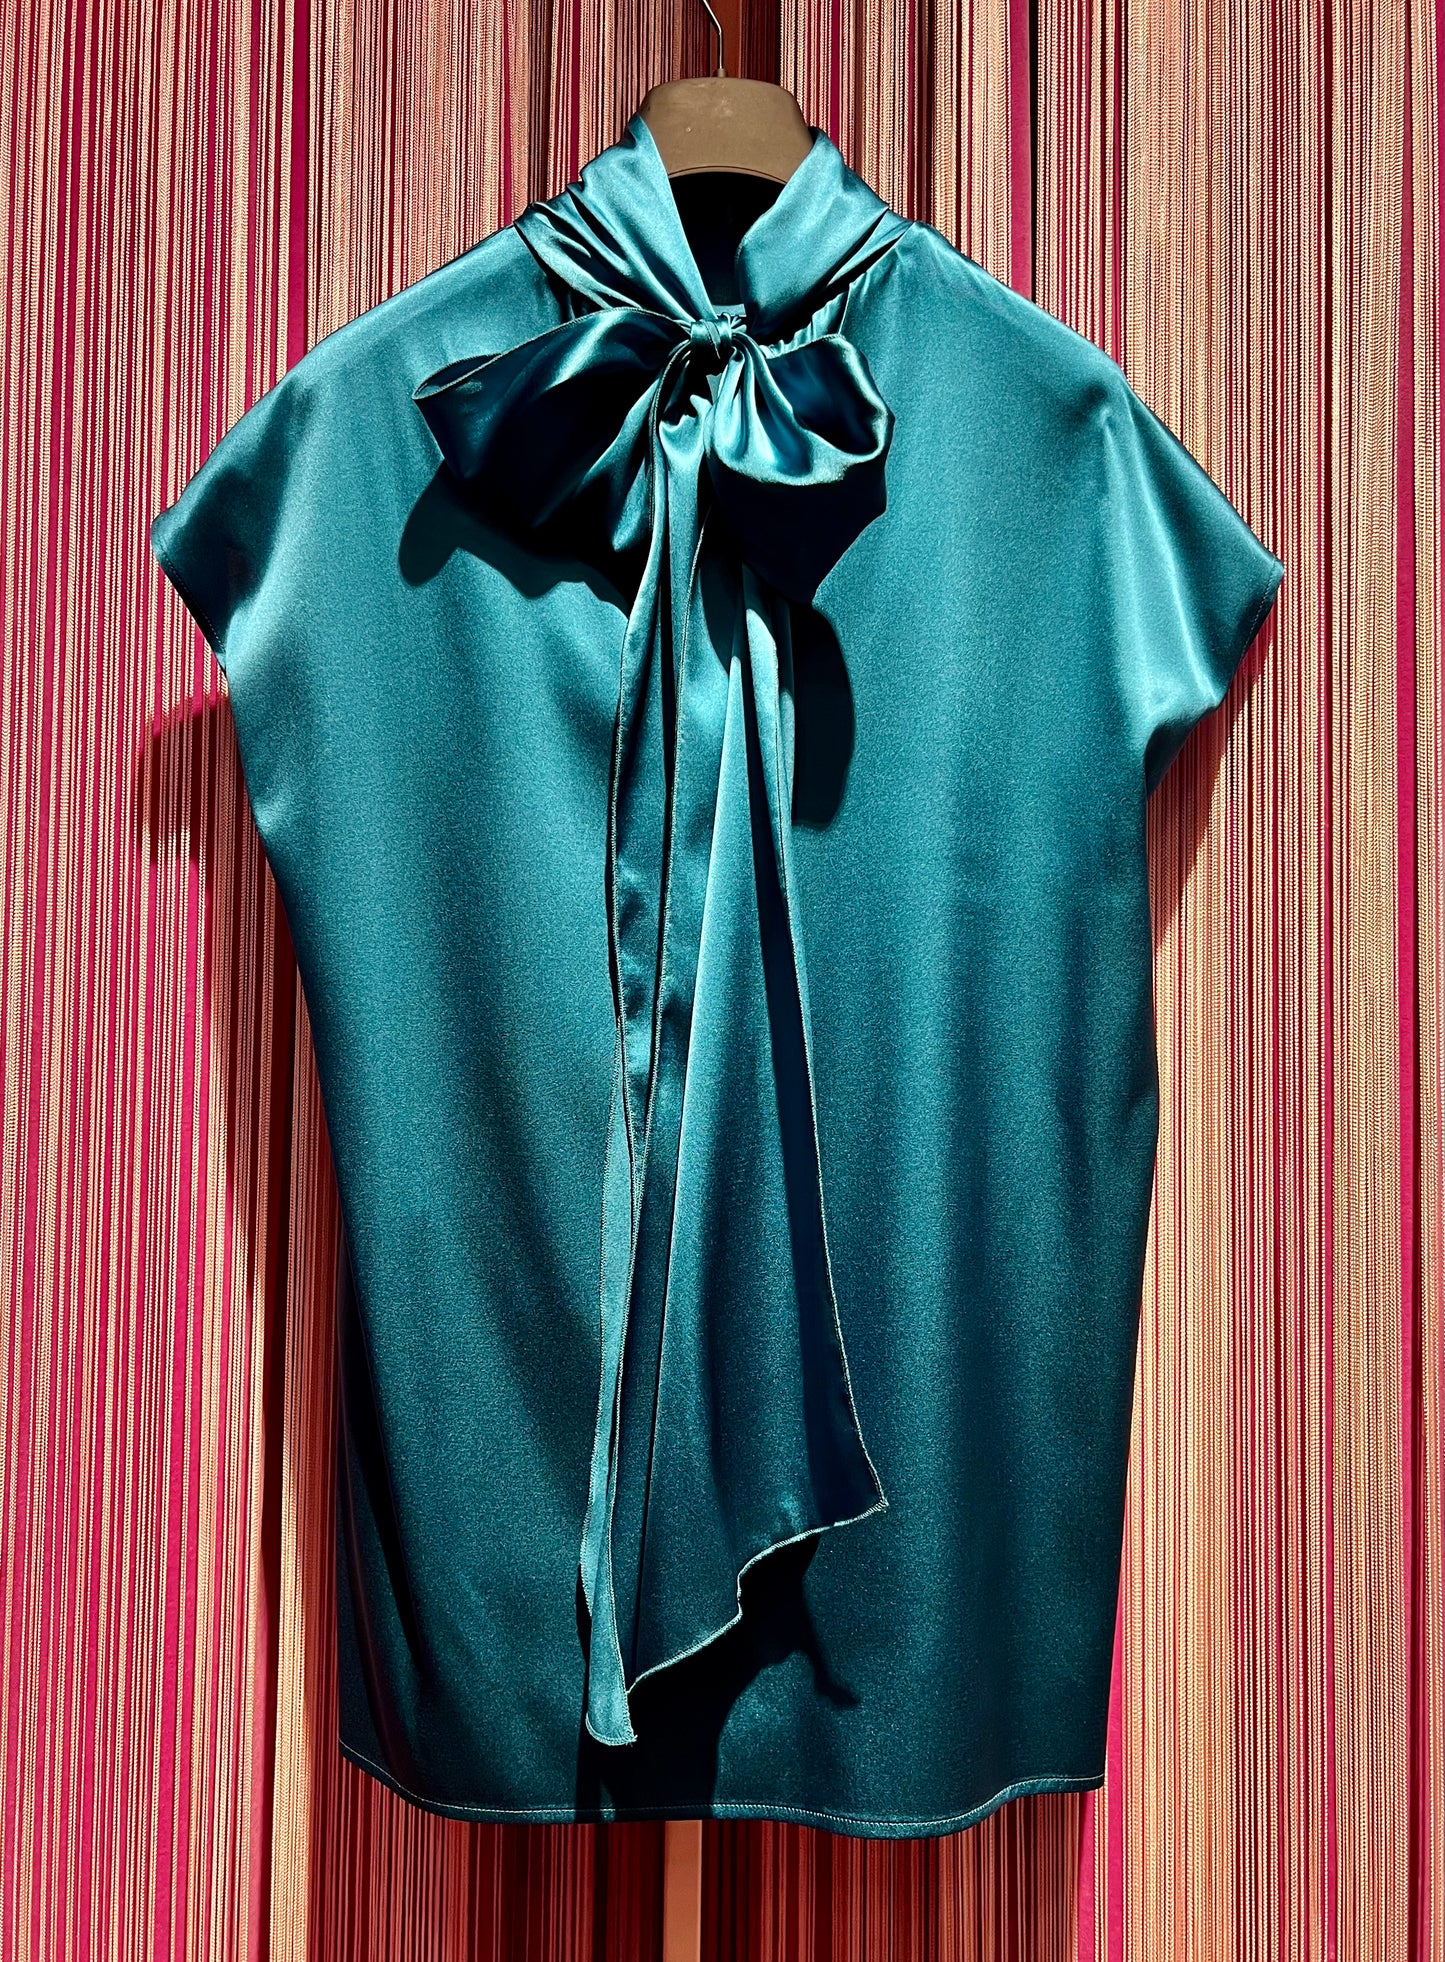 Hanami D’or blusa lapis smanicata con foulard Oz🌲